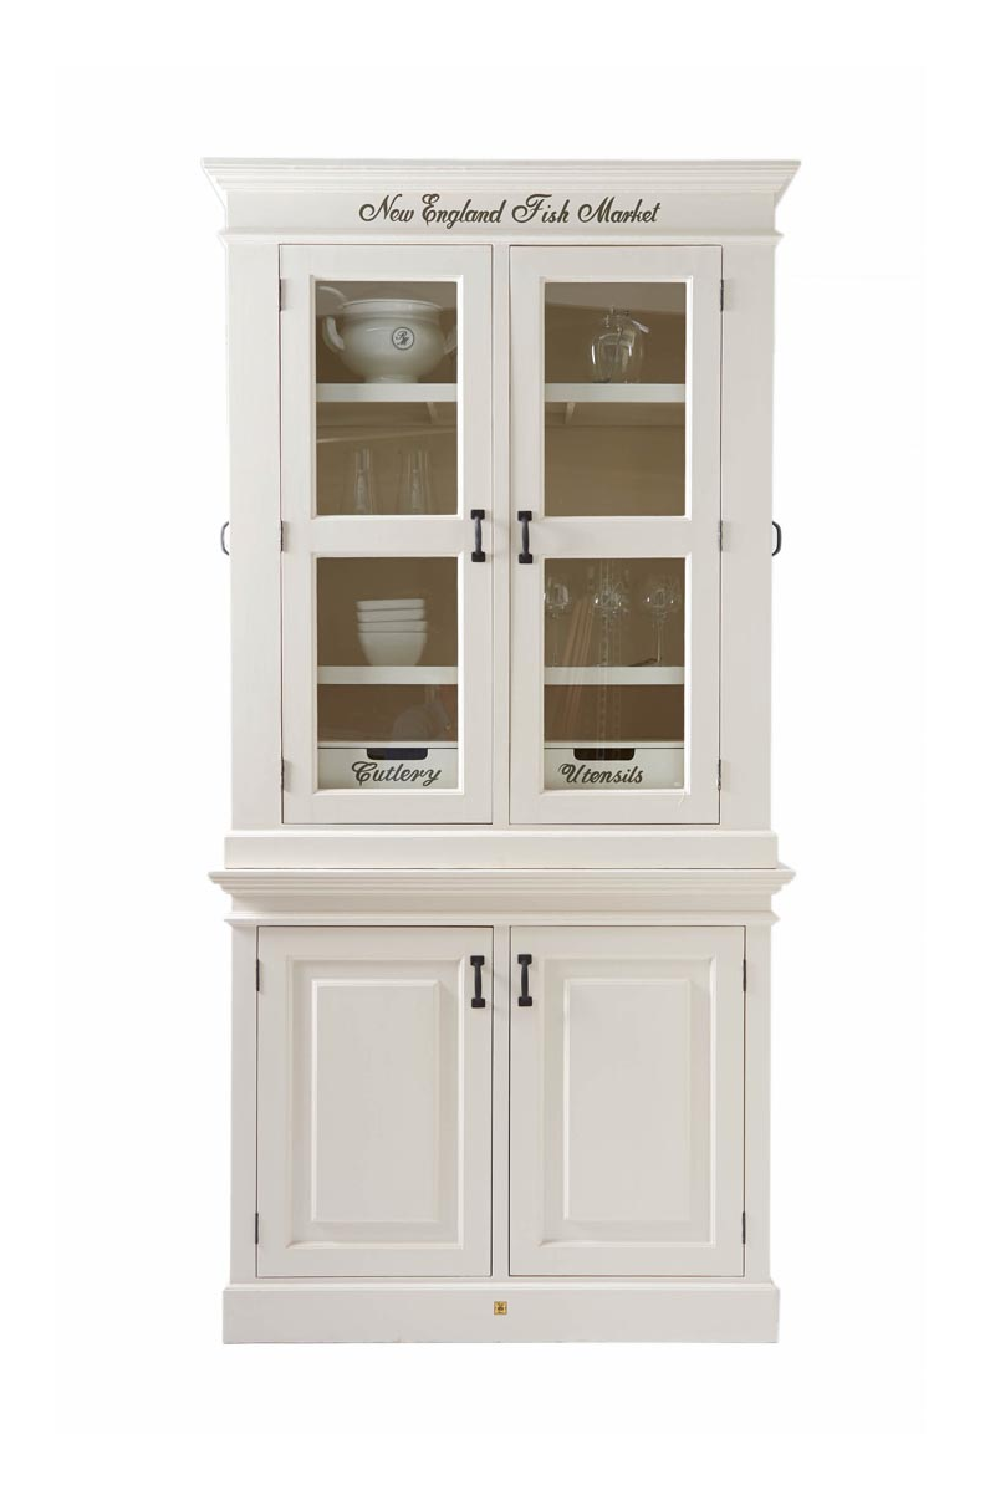 Uitstekend geroosterd brood Omkleden White Modern Classic Cabinet | Rivièra Maison | Wood Furniture